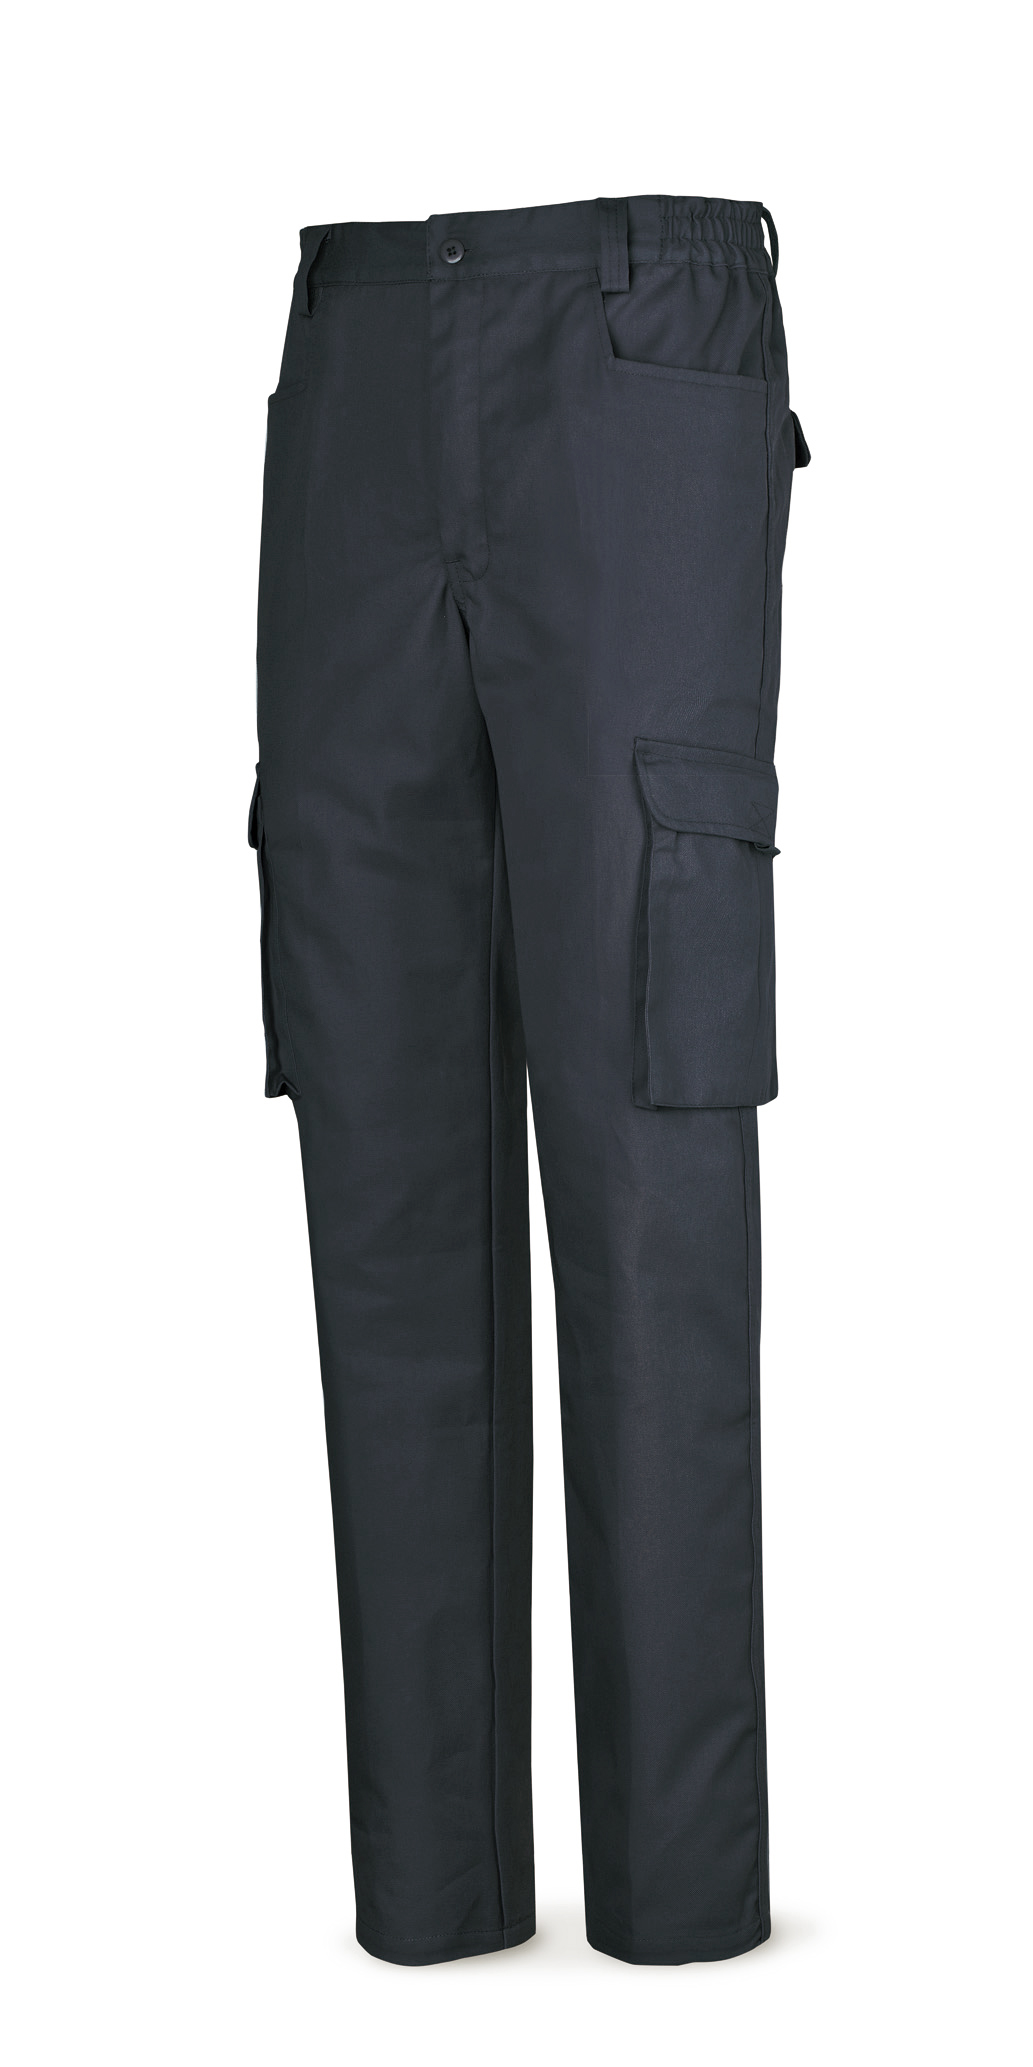 488-PAW Top Vestuario Laboral Serie Top Pantalón MUJER azul marino algodón de 245 g. Multibolsillo